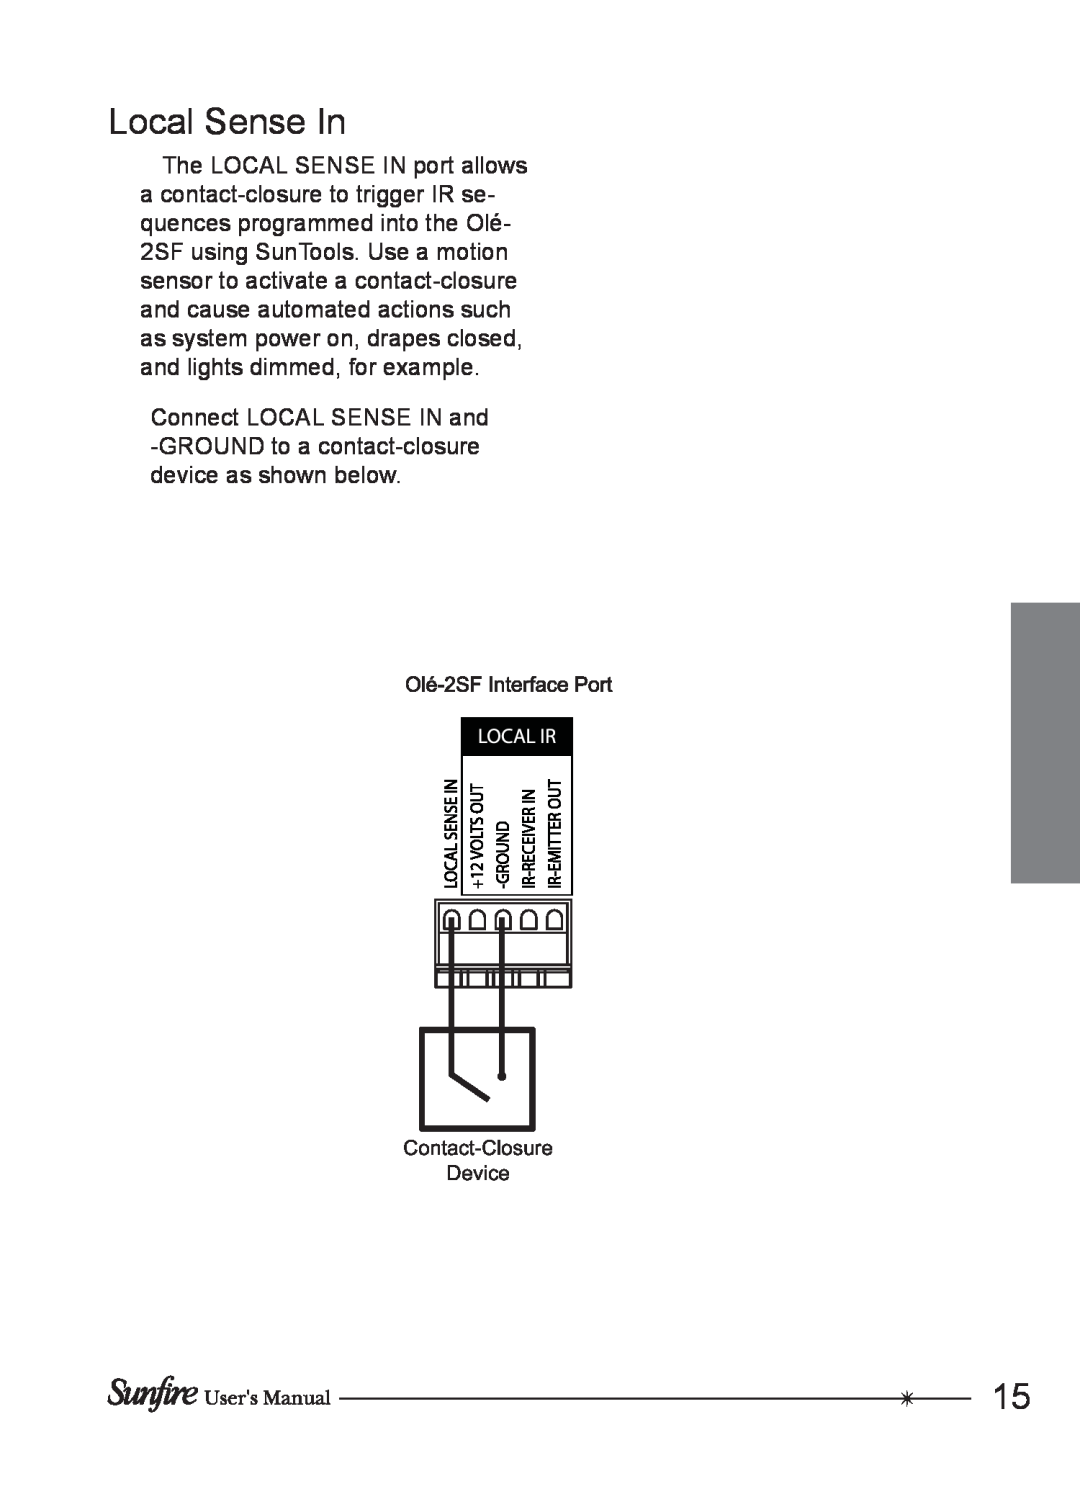 Sunfire OLE-2SF manual Local Sense In, Contact-Closure Device 